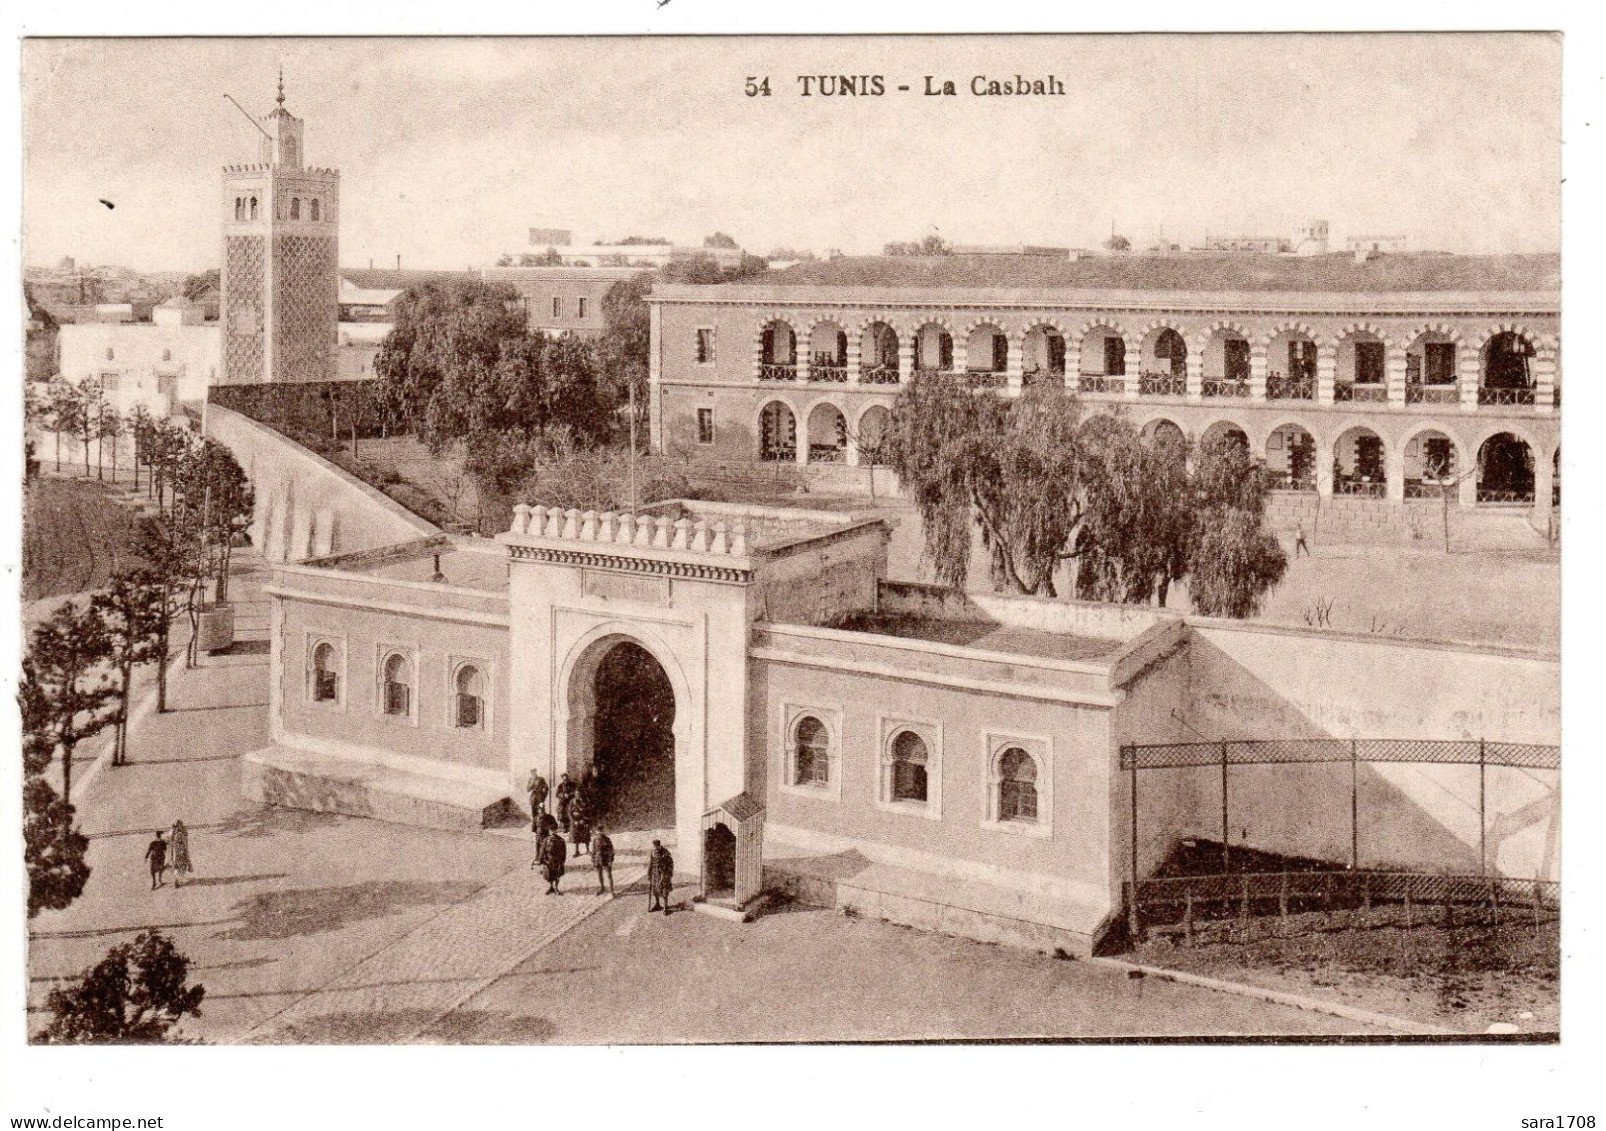 TUNIS, La Casbah. - Tunisia